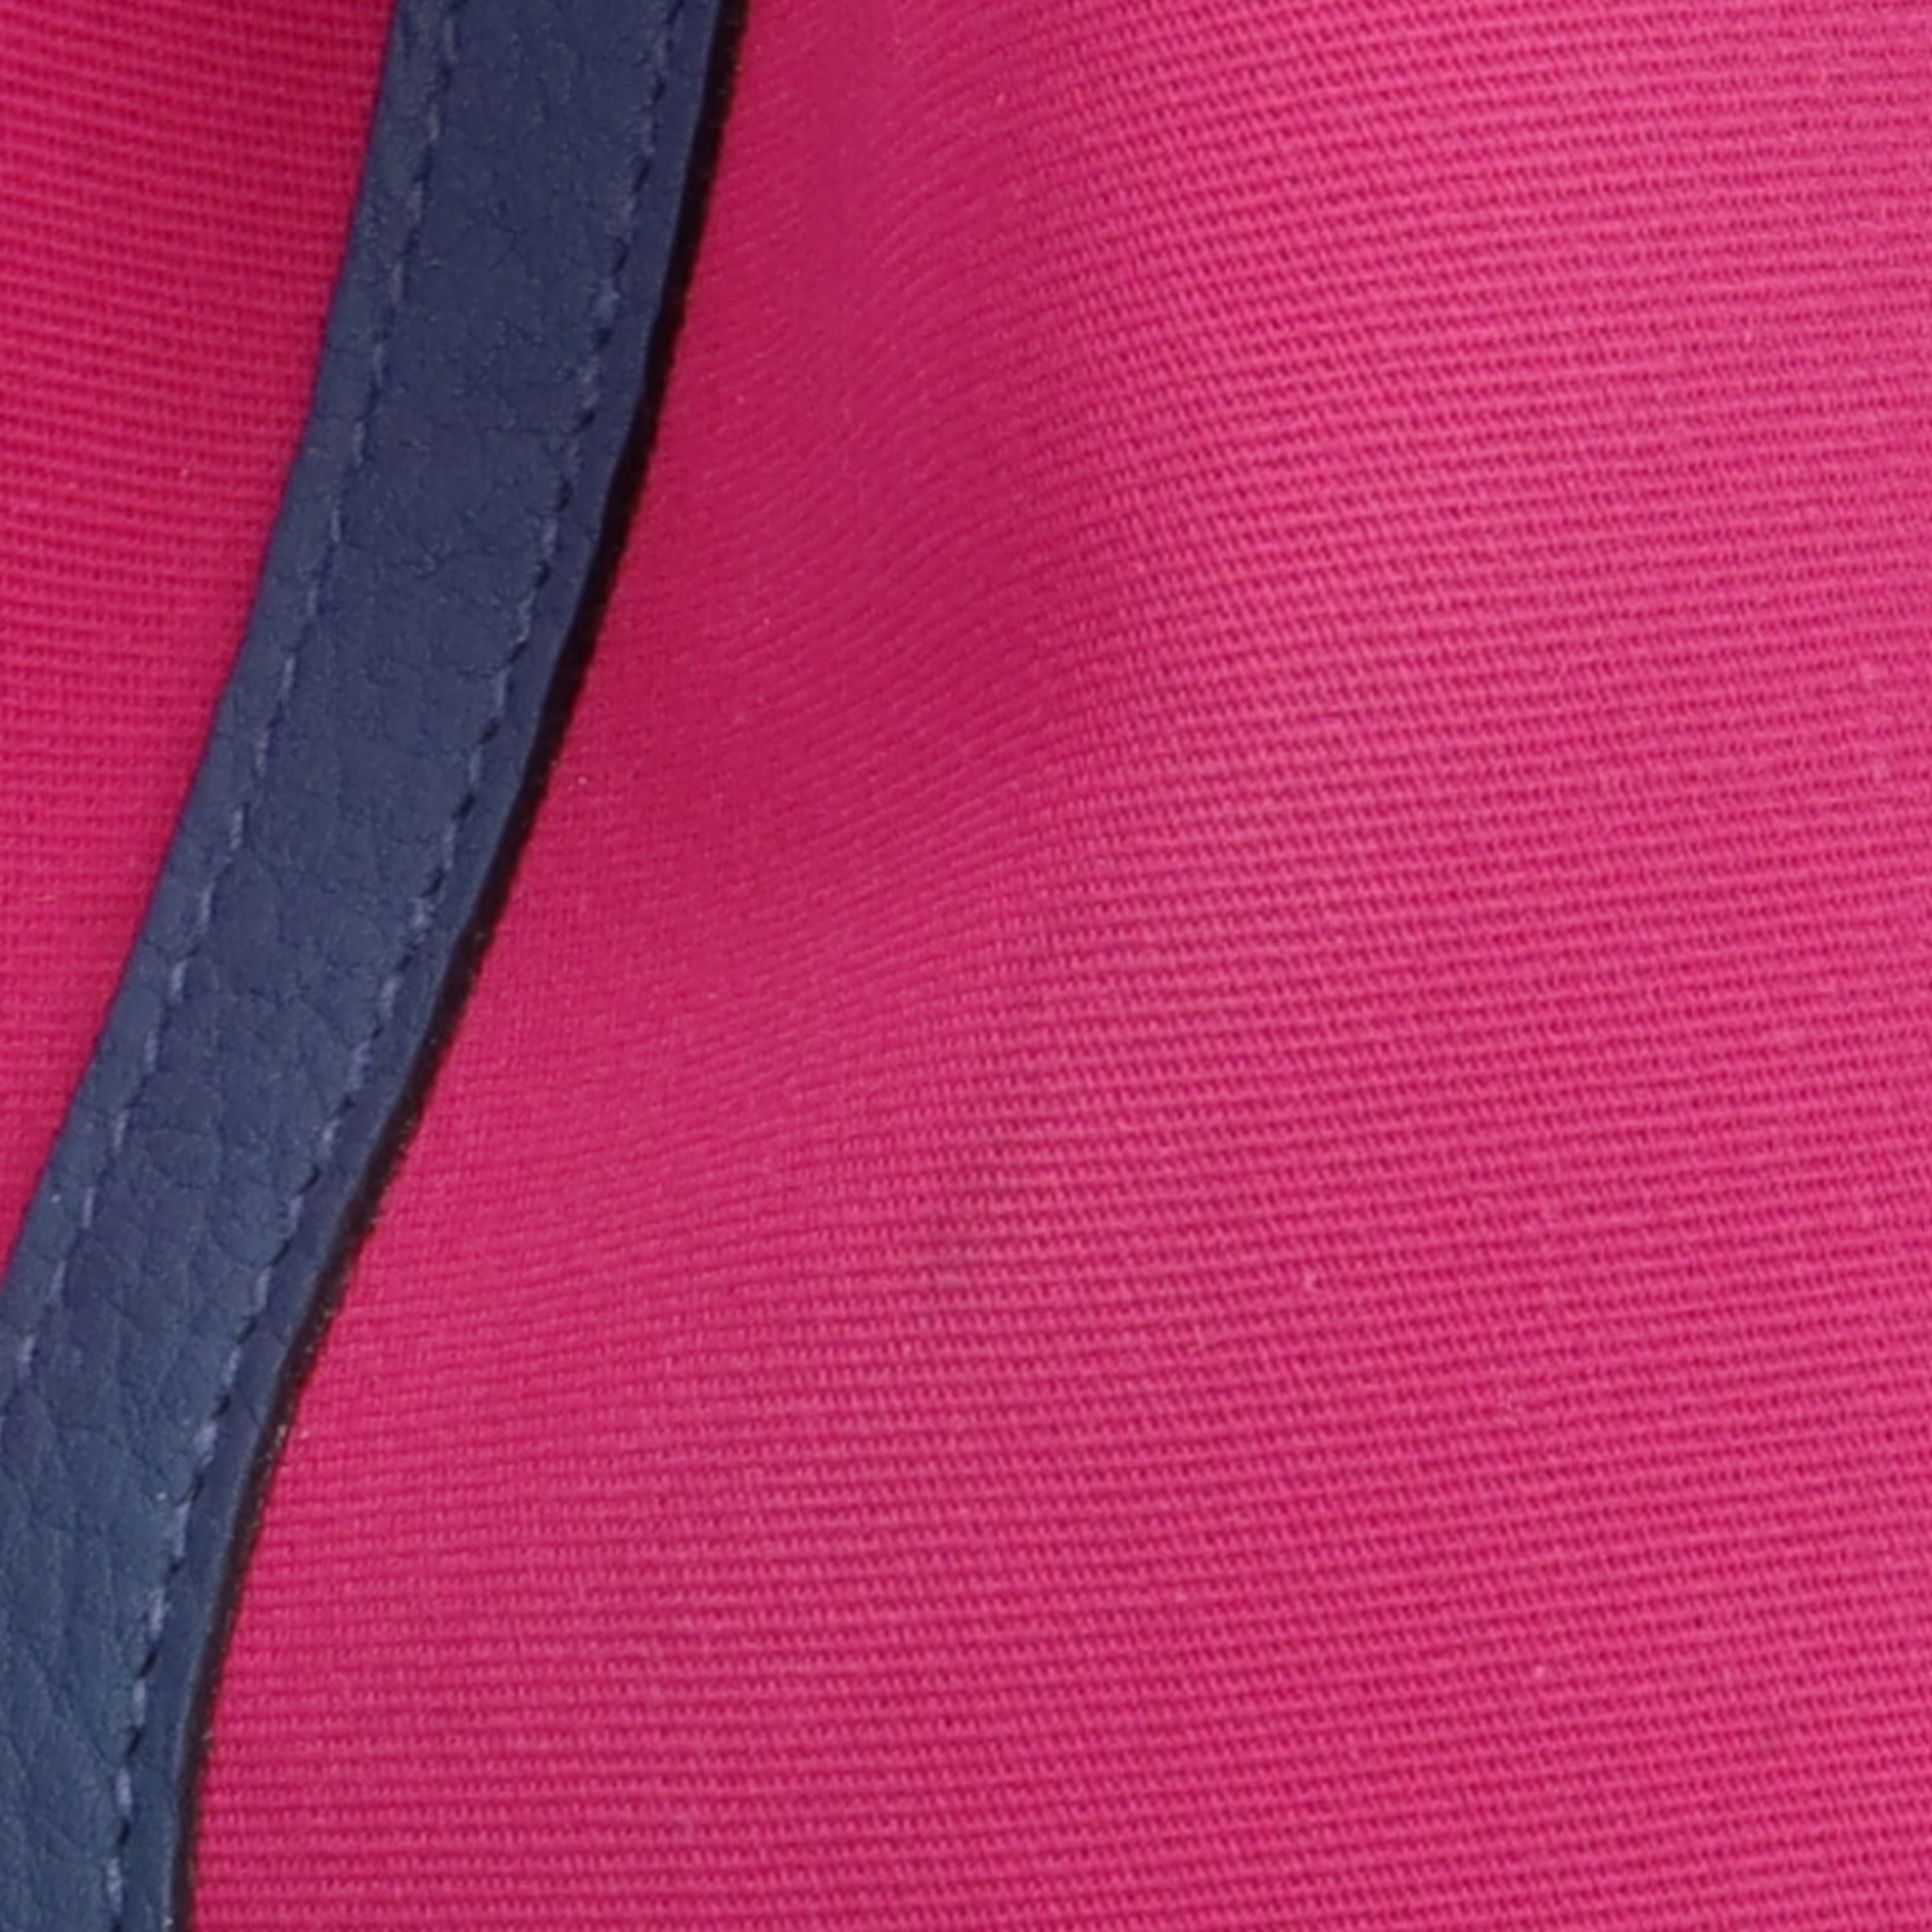 Hermes HERMES TPM Garden Tote Bag Toile Officie Pink Women's